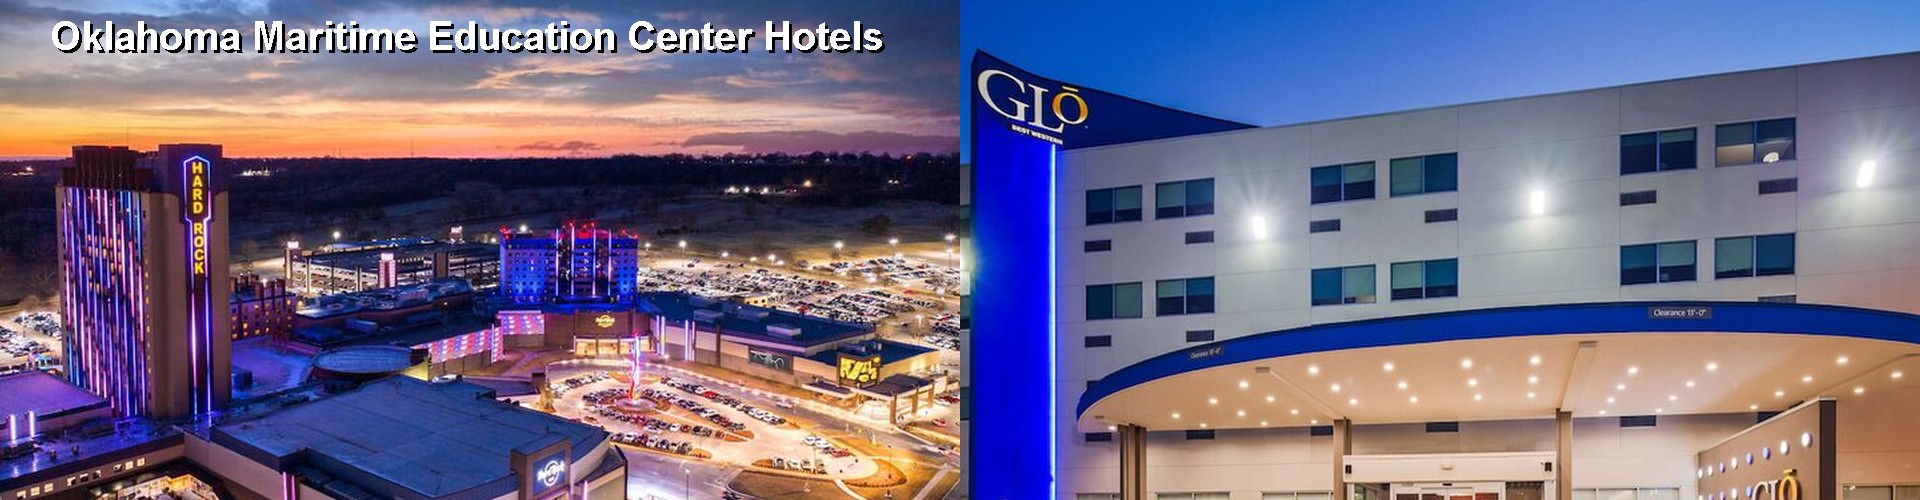 5 Best Hotels near Oklahoma Maritime Education Center